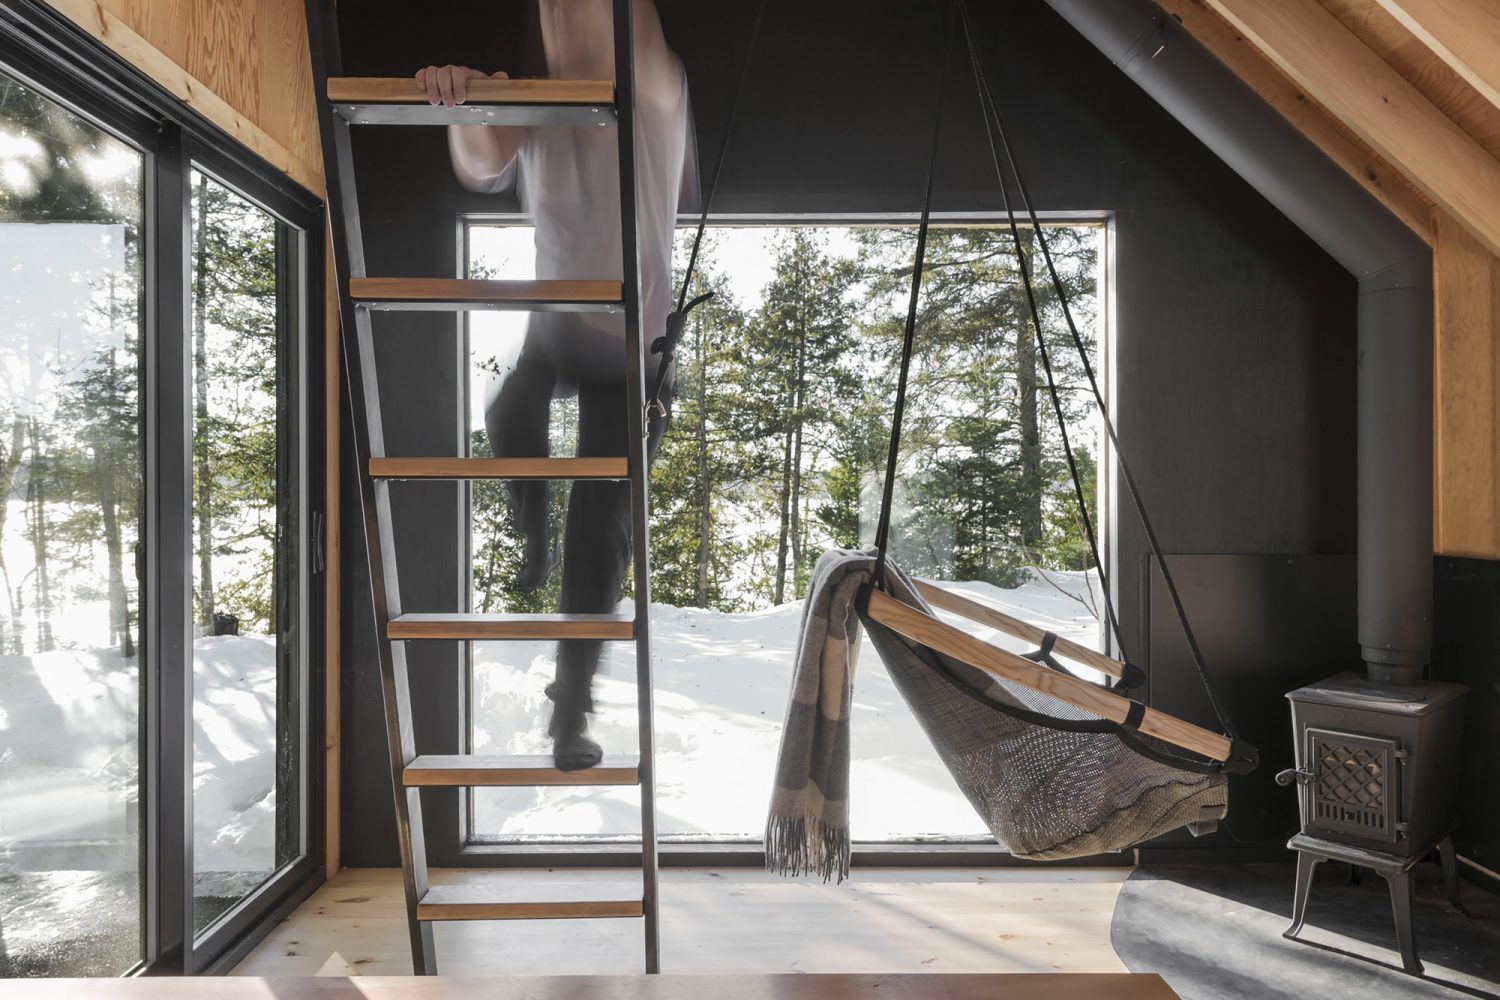 La Pointe | Reinterpretation of an A-Frame Cabin by Atelier L'abri